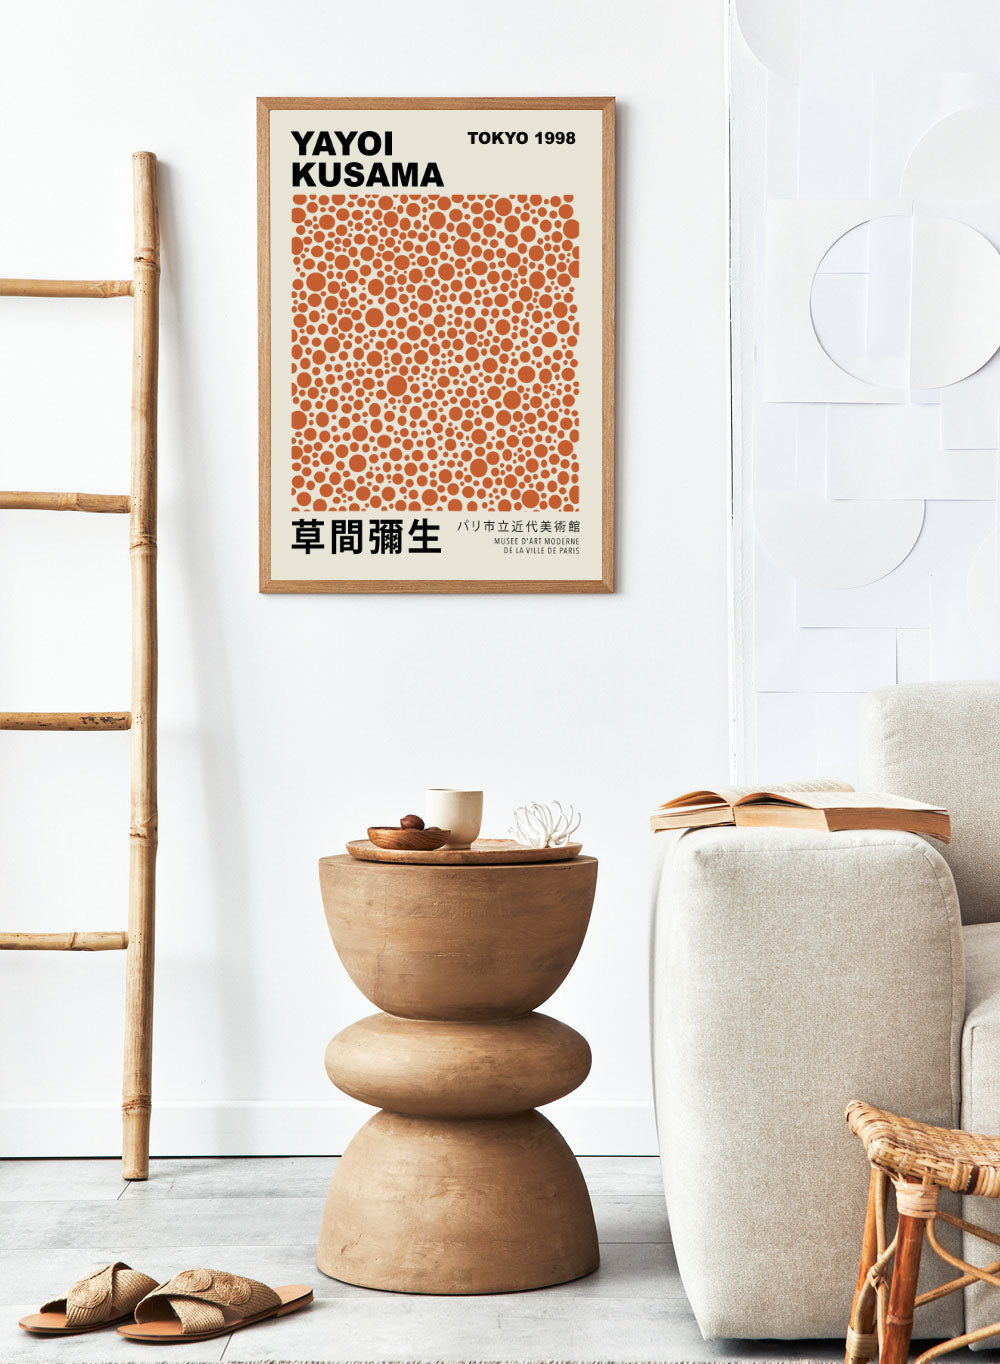 Yayoi Kusama 草間彌生 Terracotta Polka Dots Exhibition Poster